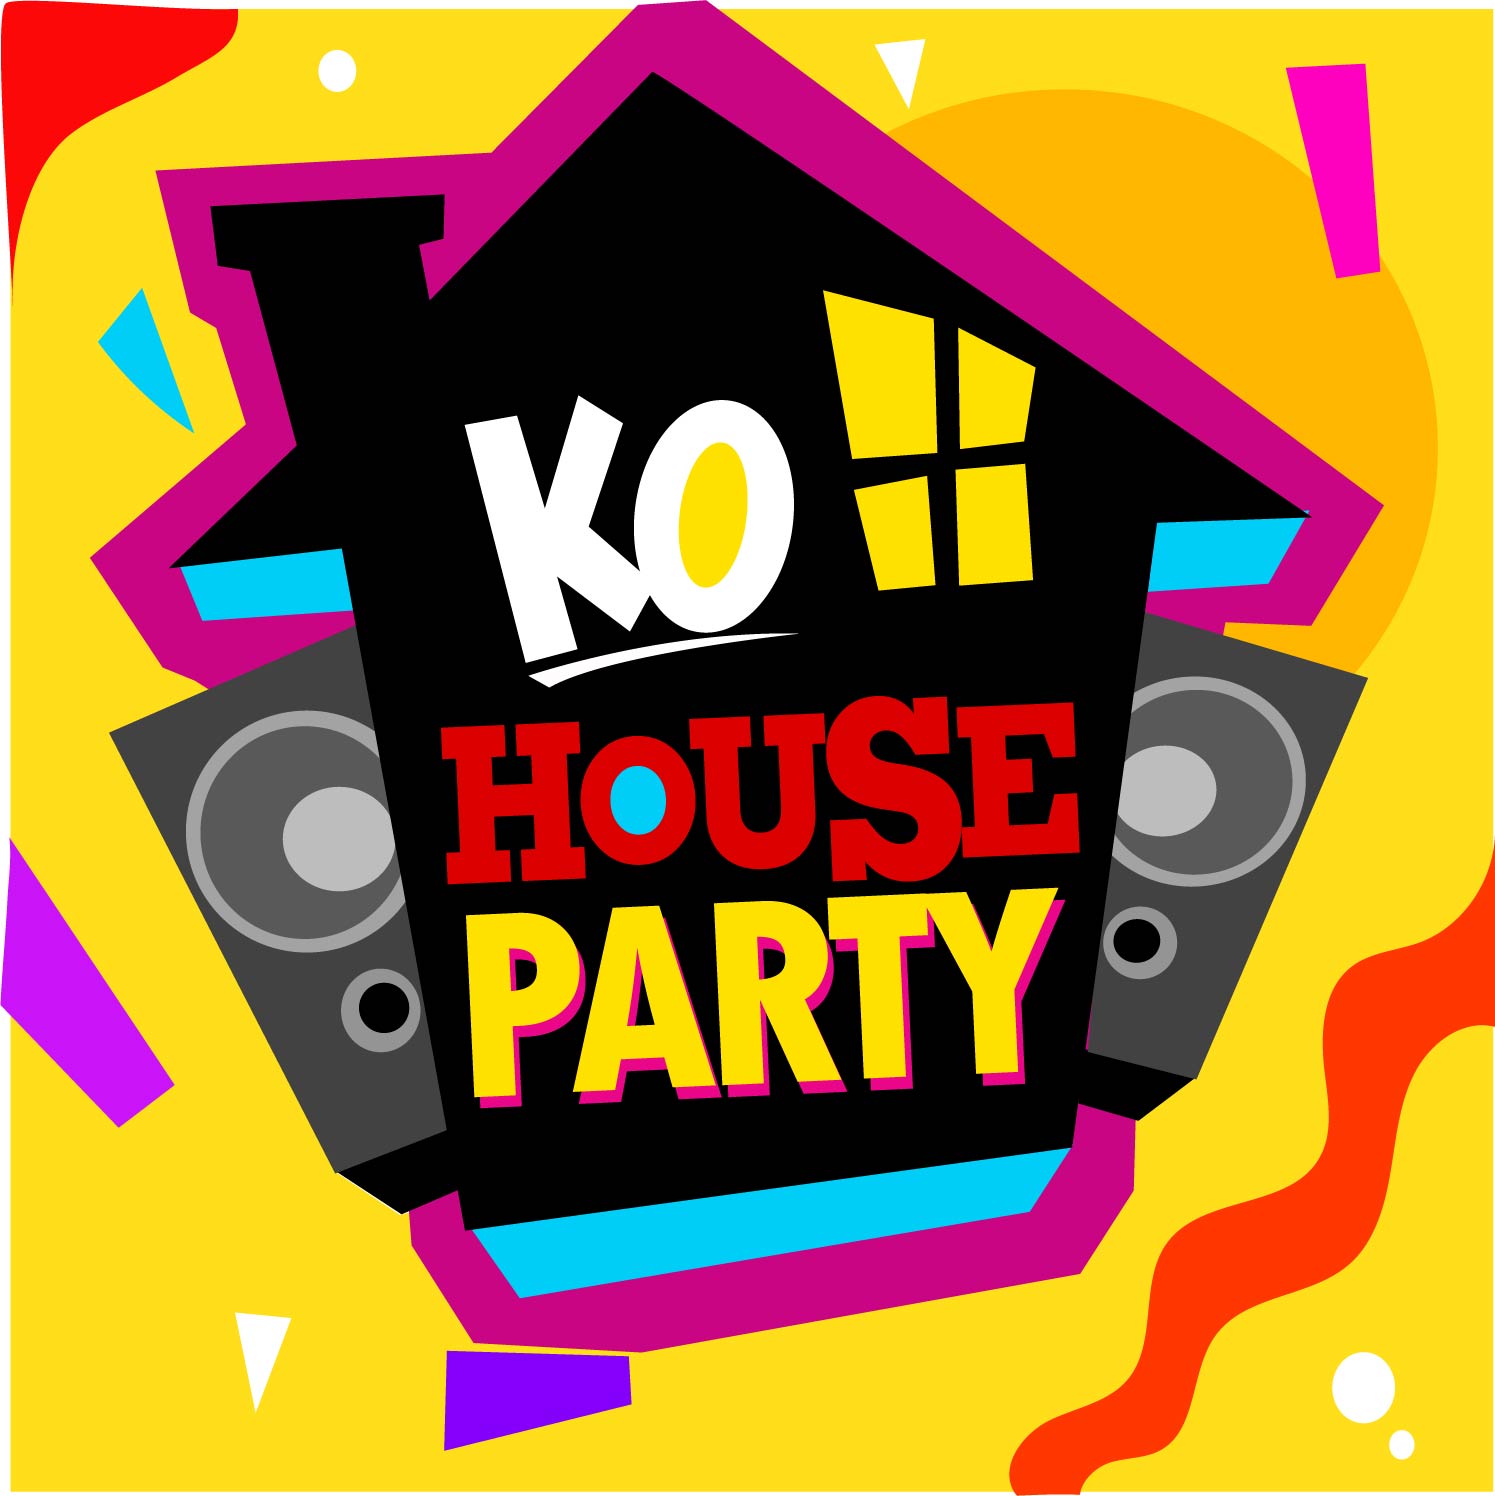 house party movie logo